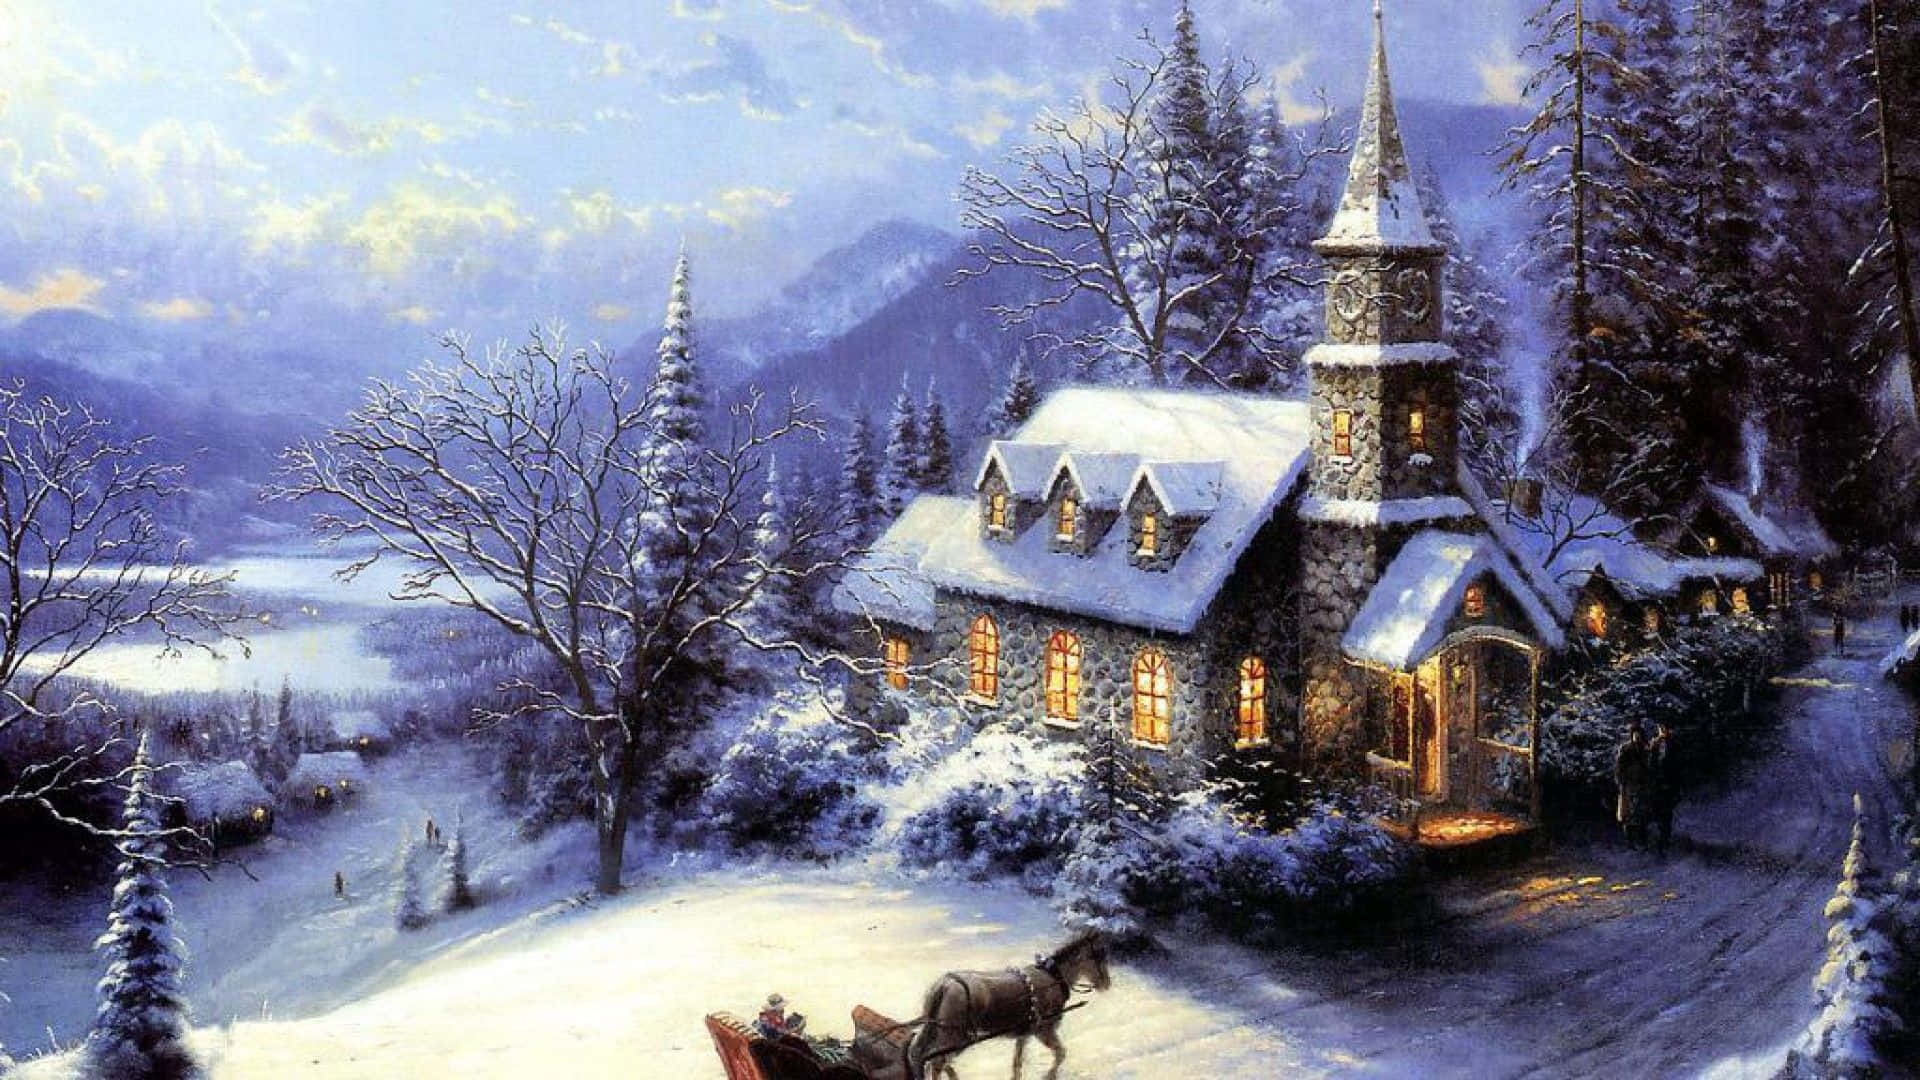 Picturesque Snowy Village in Winter Wallpaper